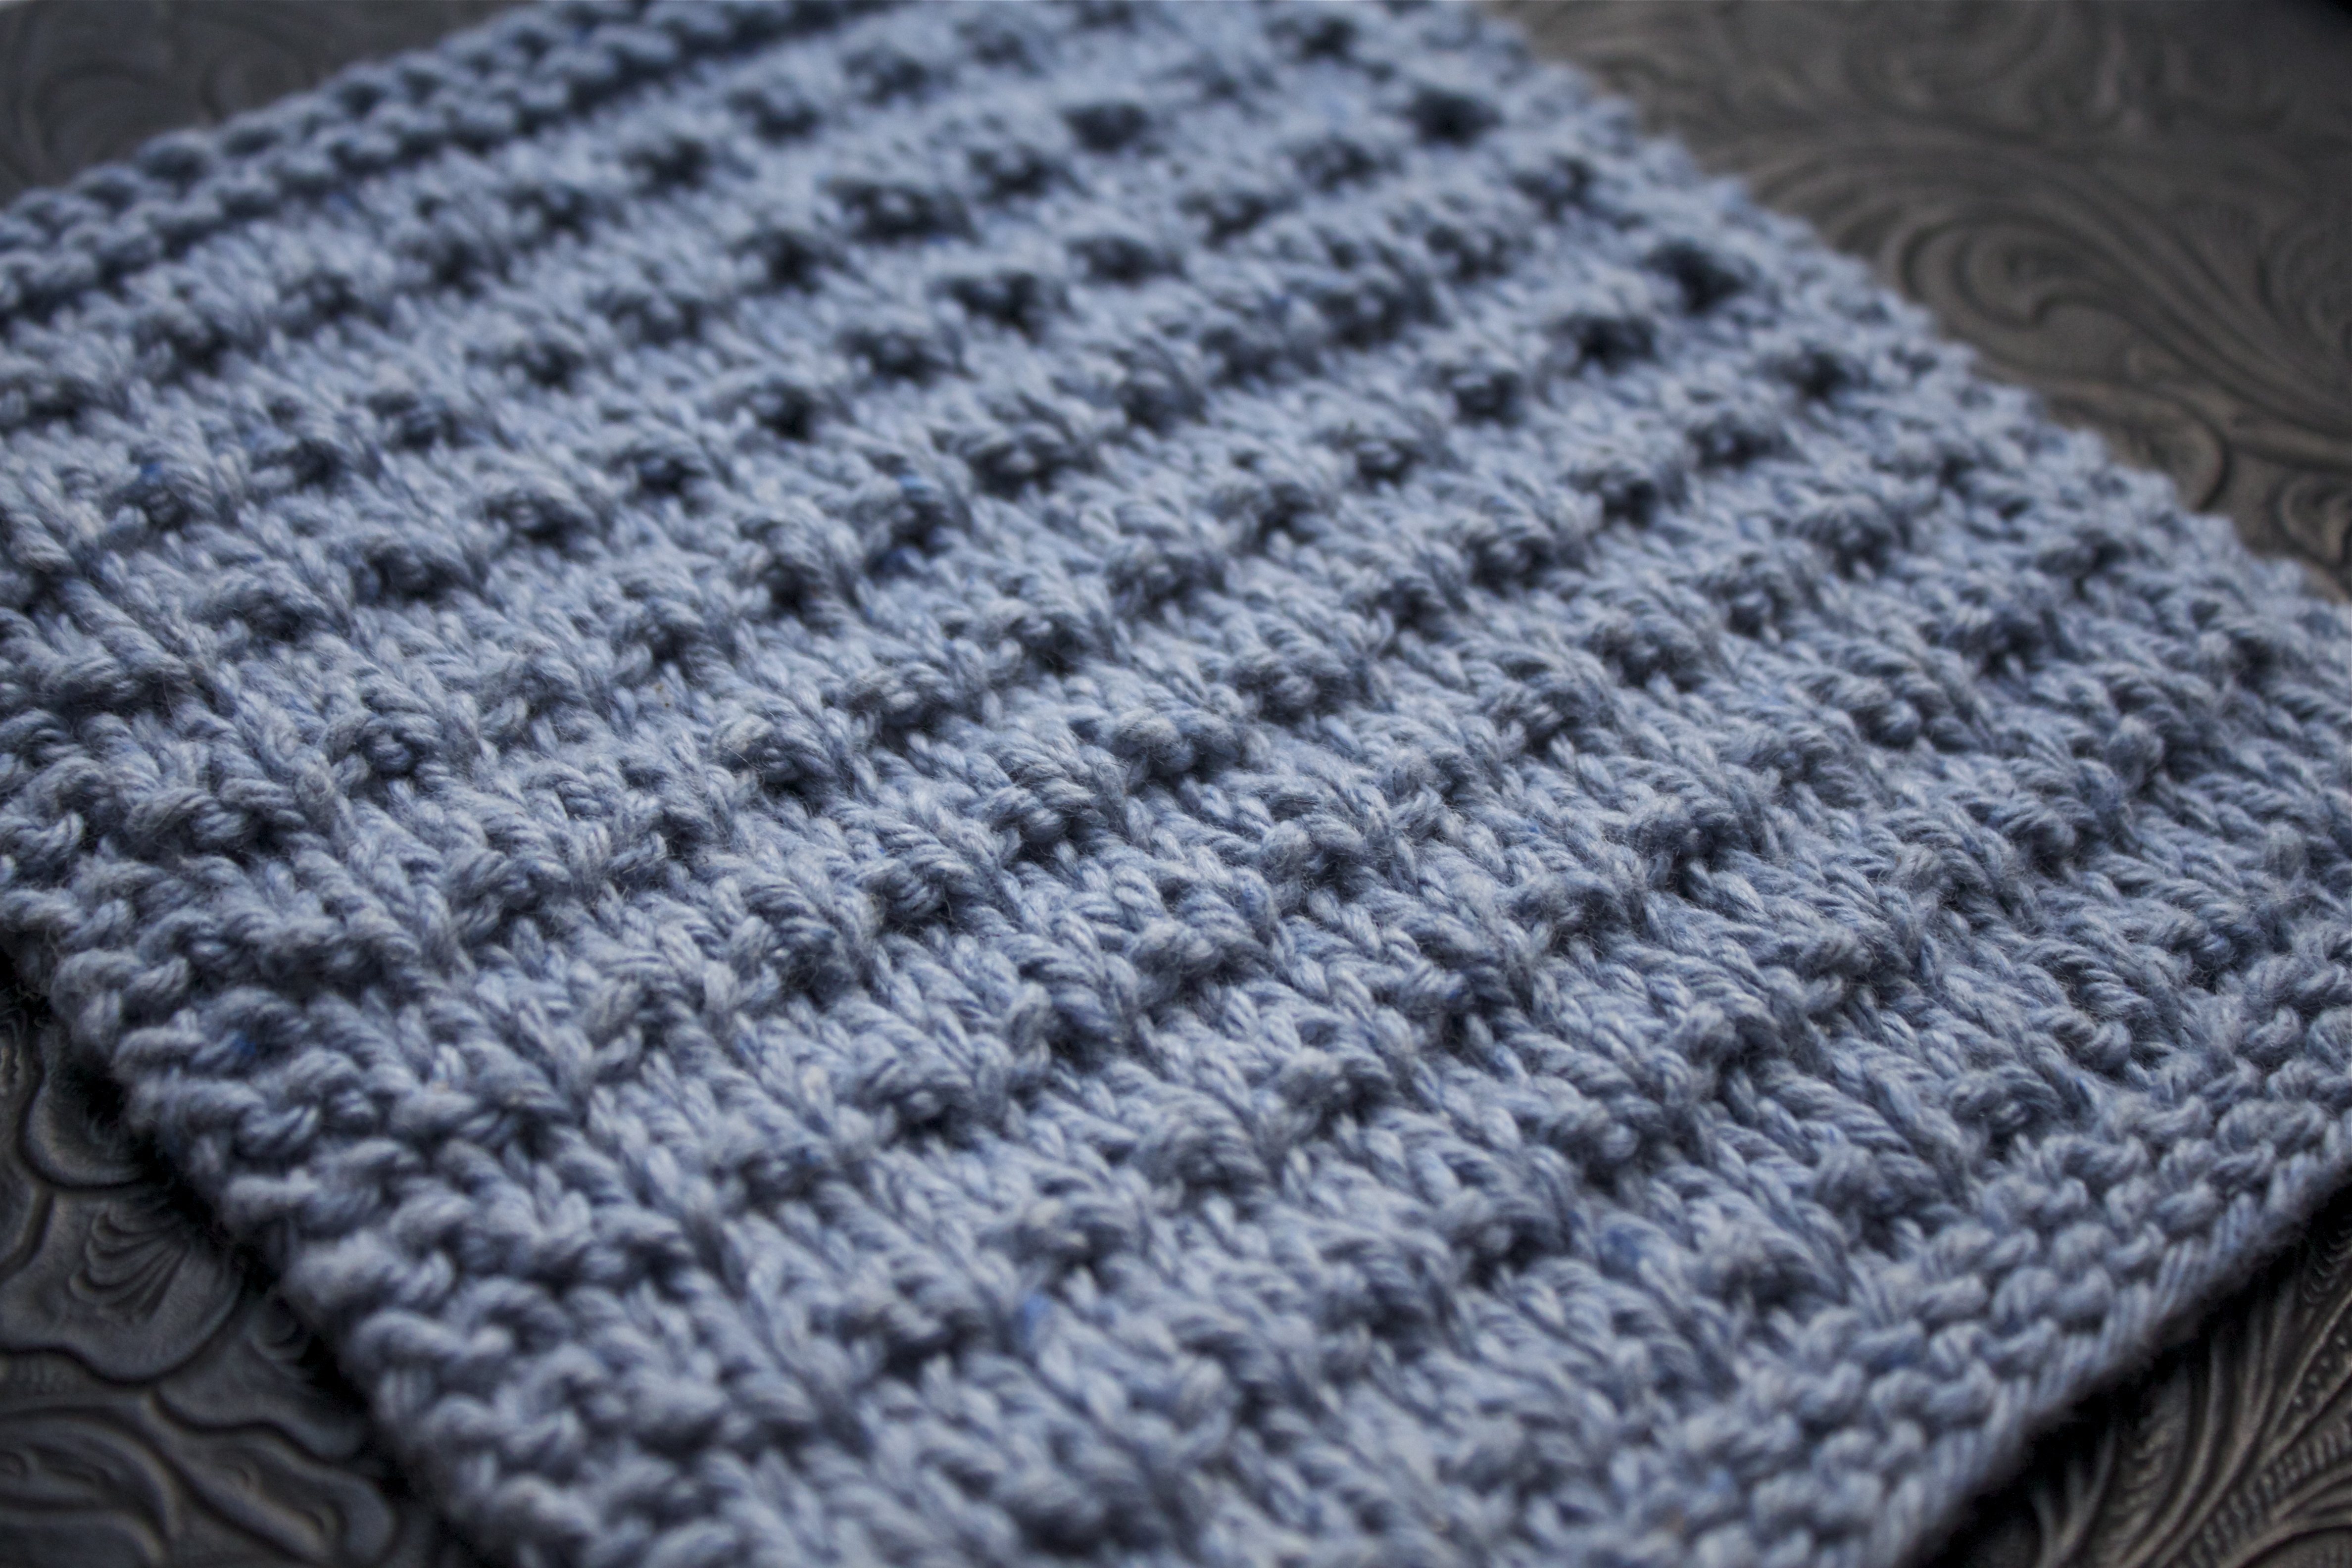 Bumpy Knit Dishcloth Pattern